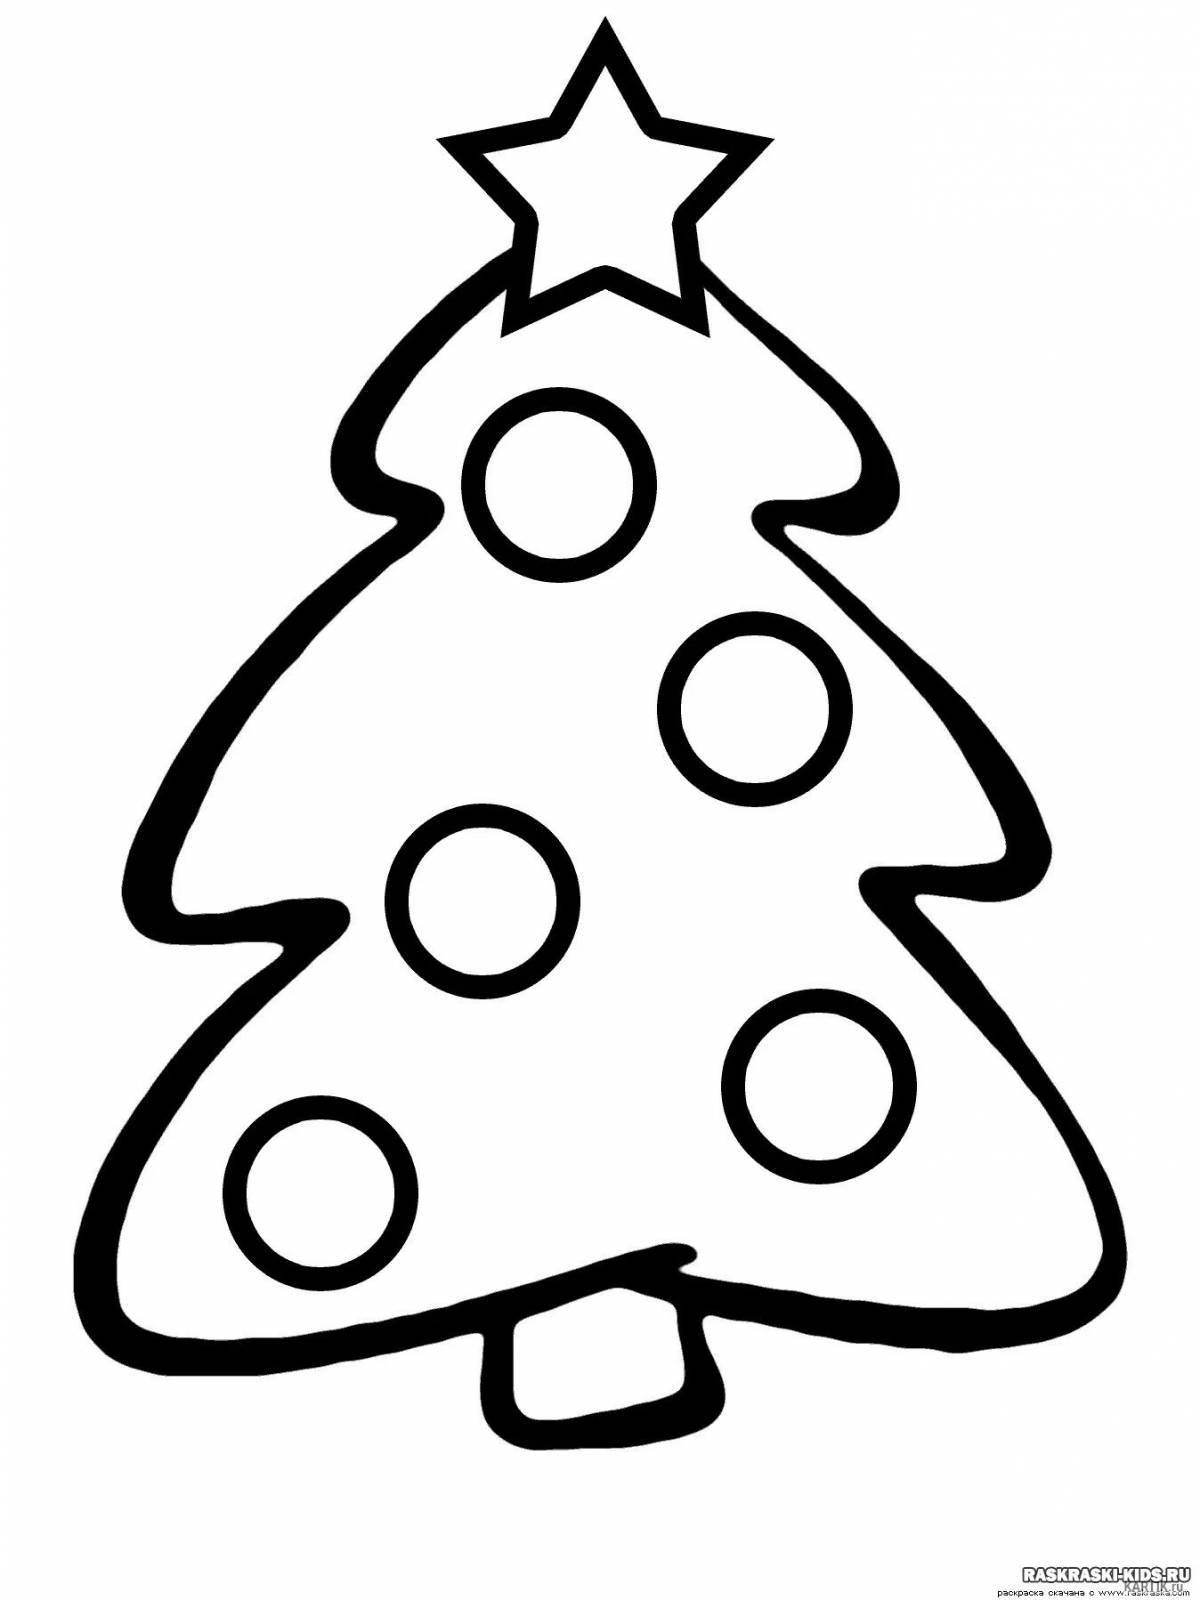 Glorious Christmas tree with balls